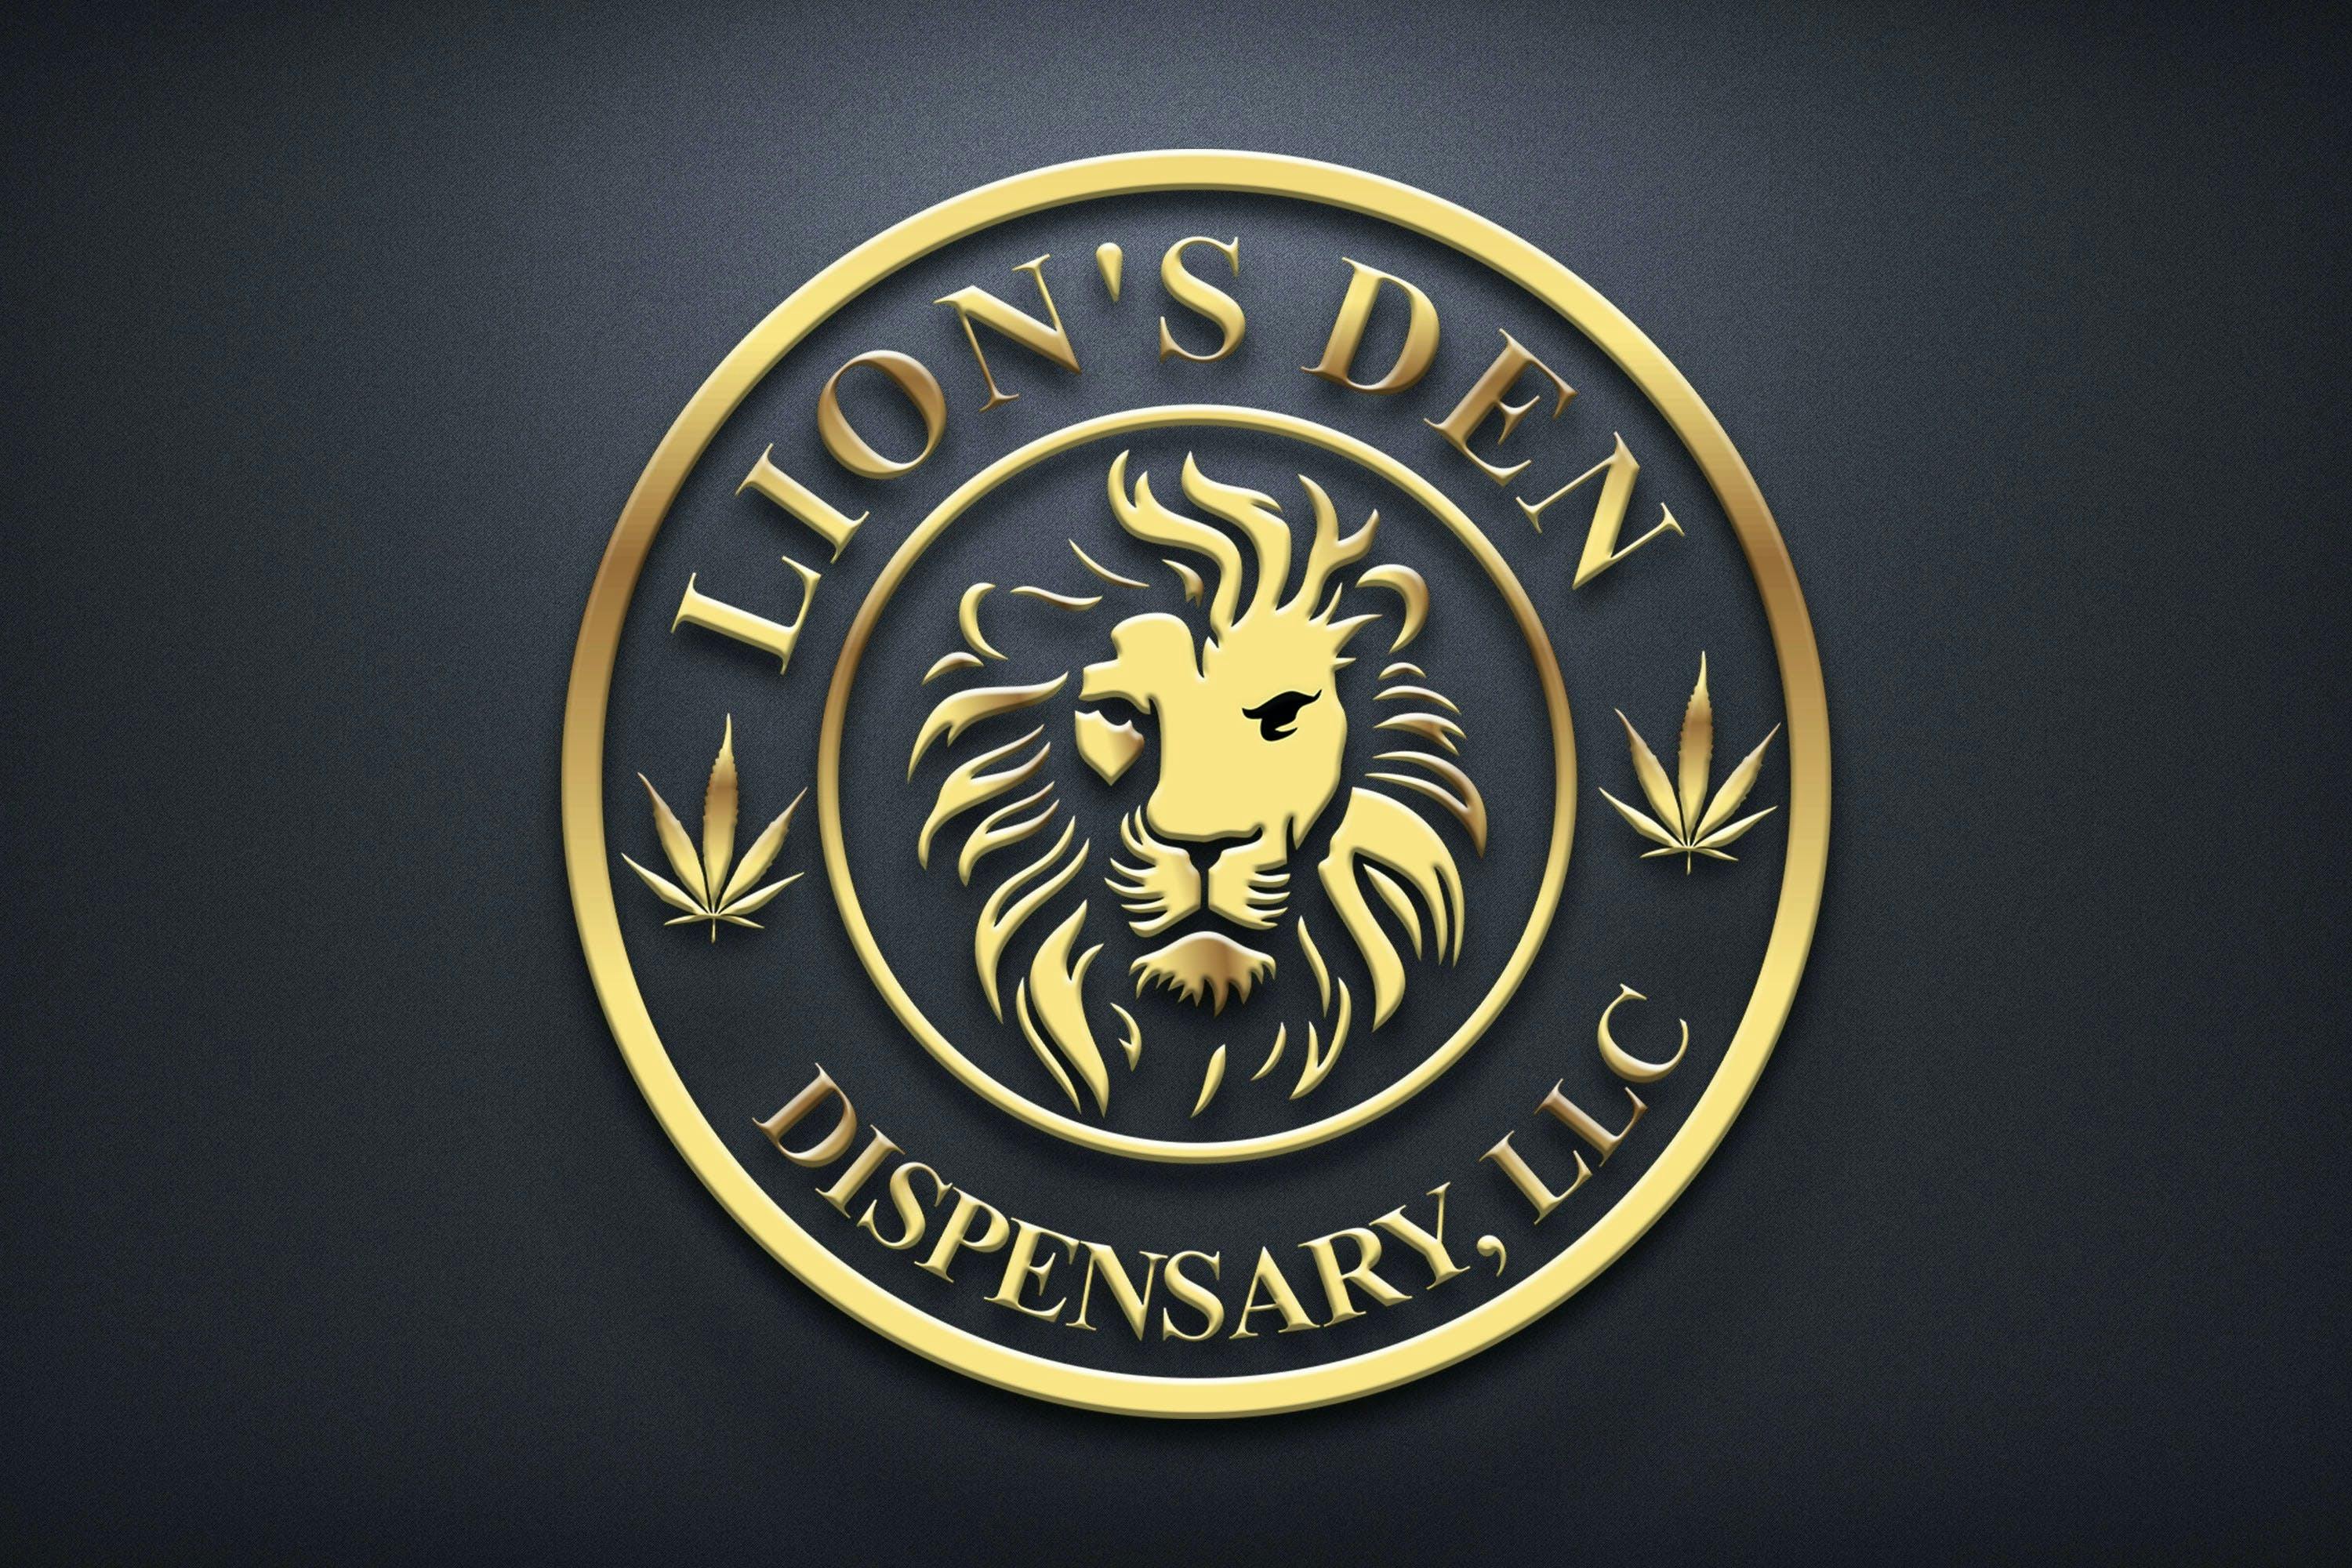 Lion's Den Dispensary logo